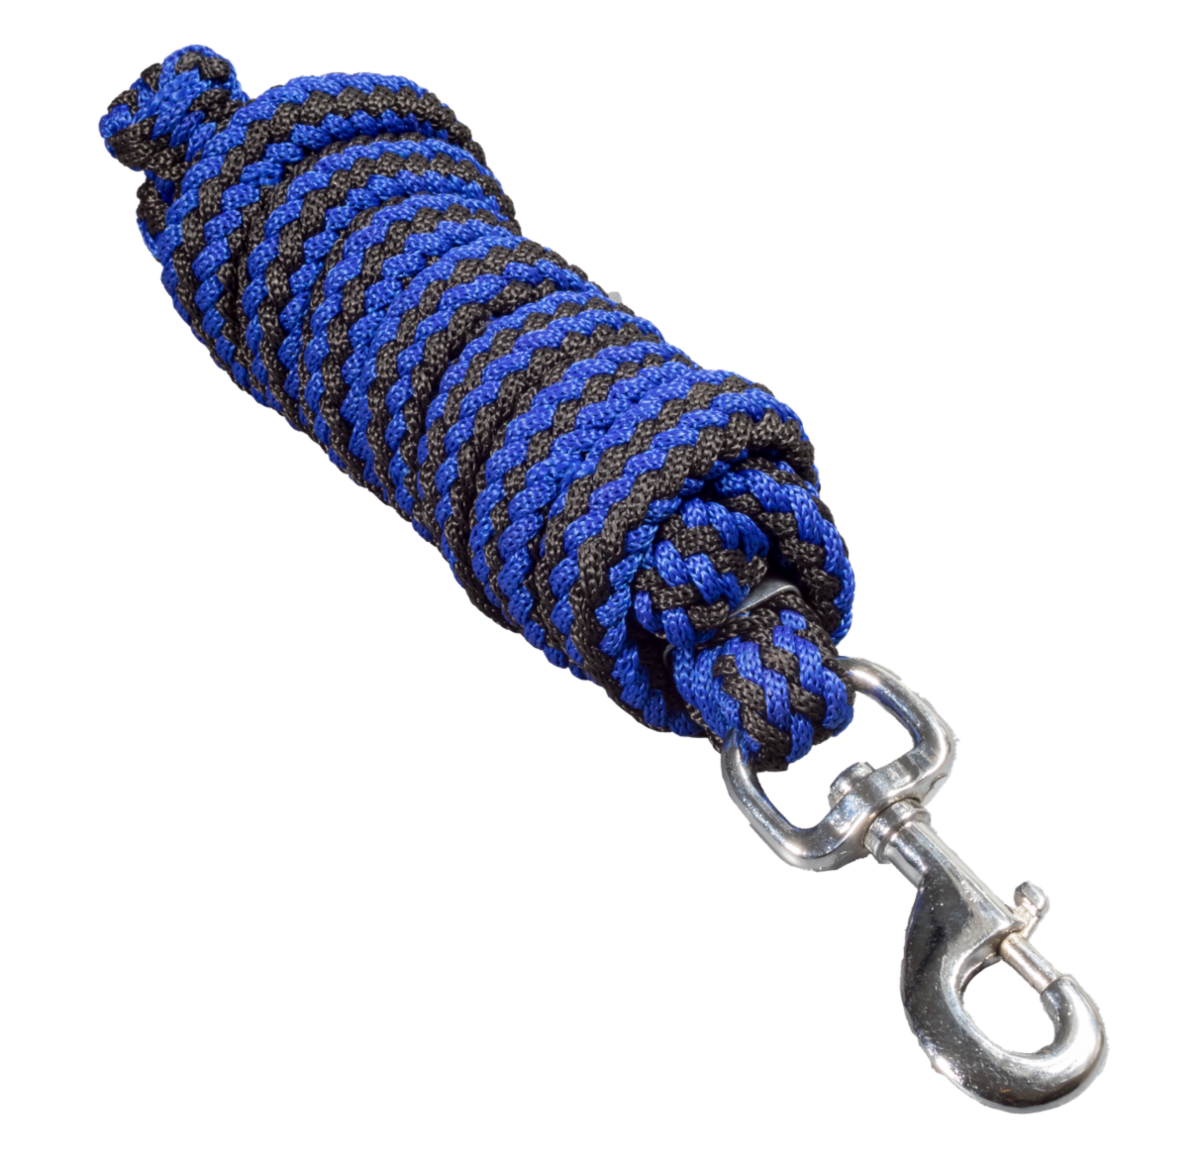 Lead rope